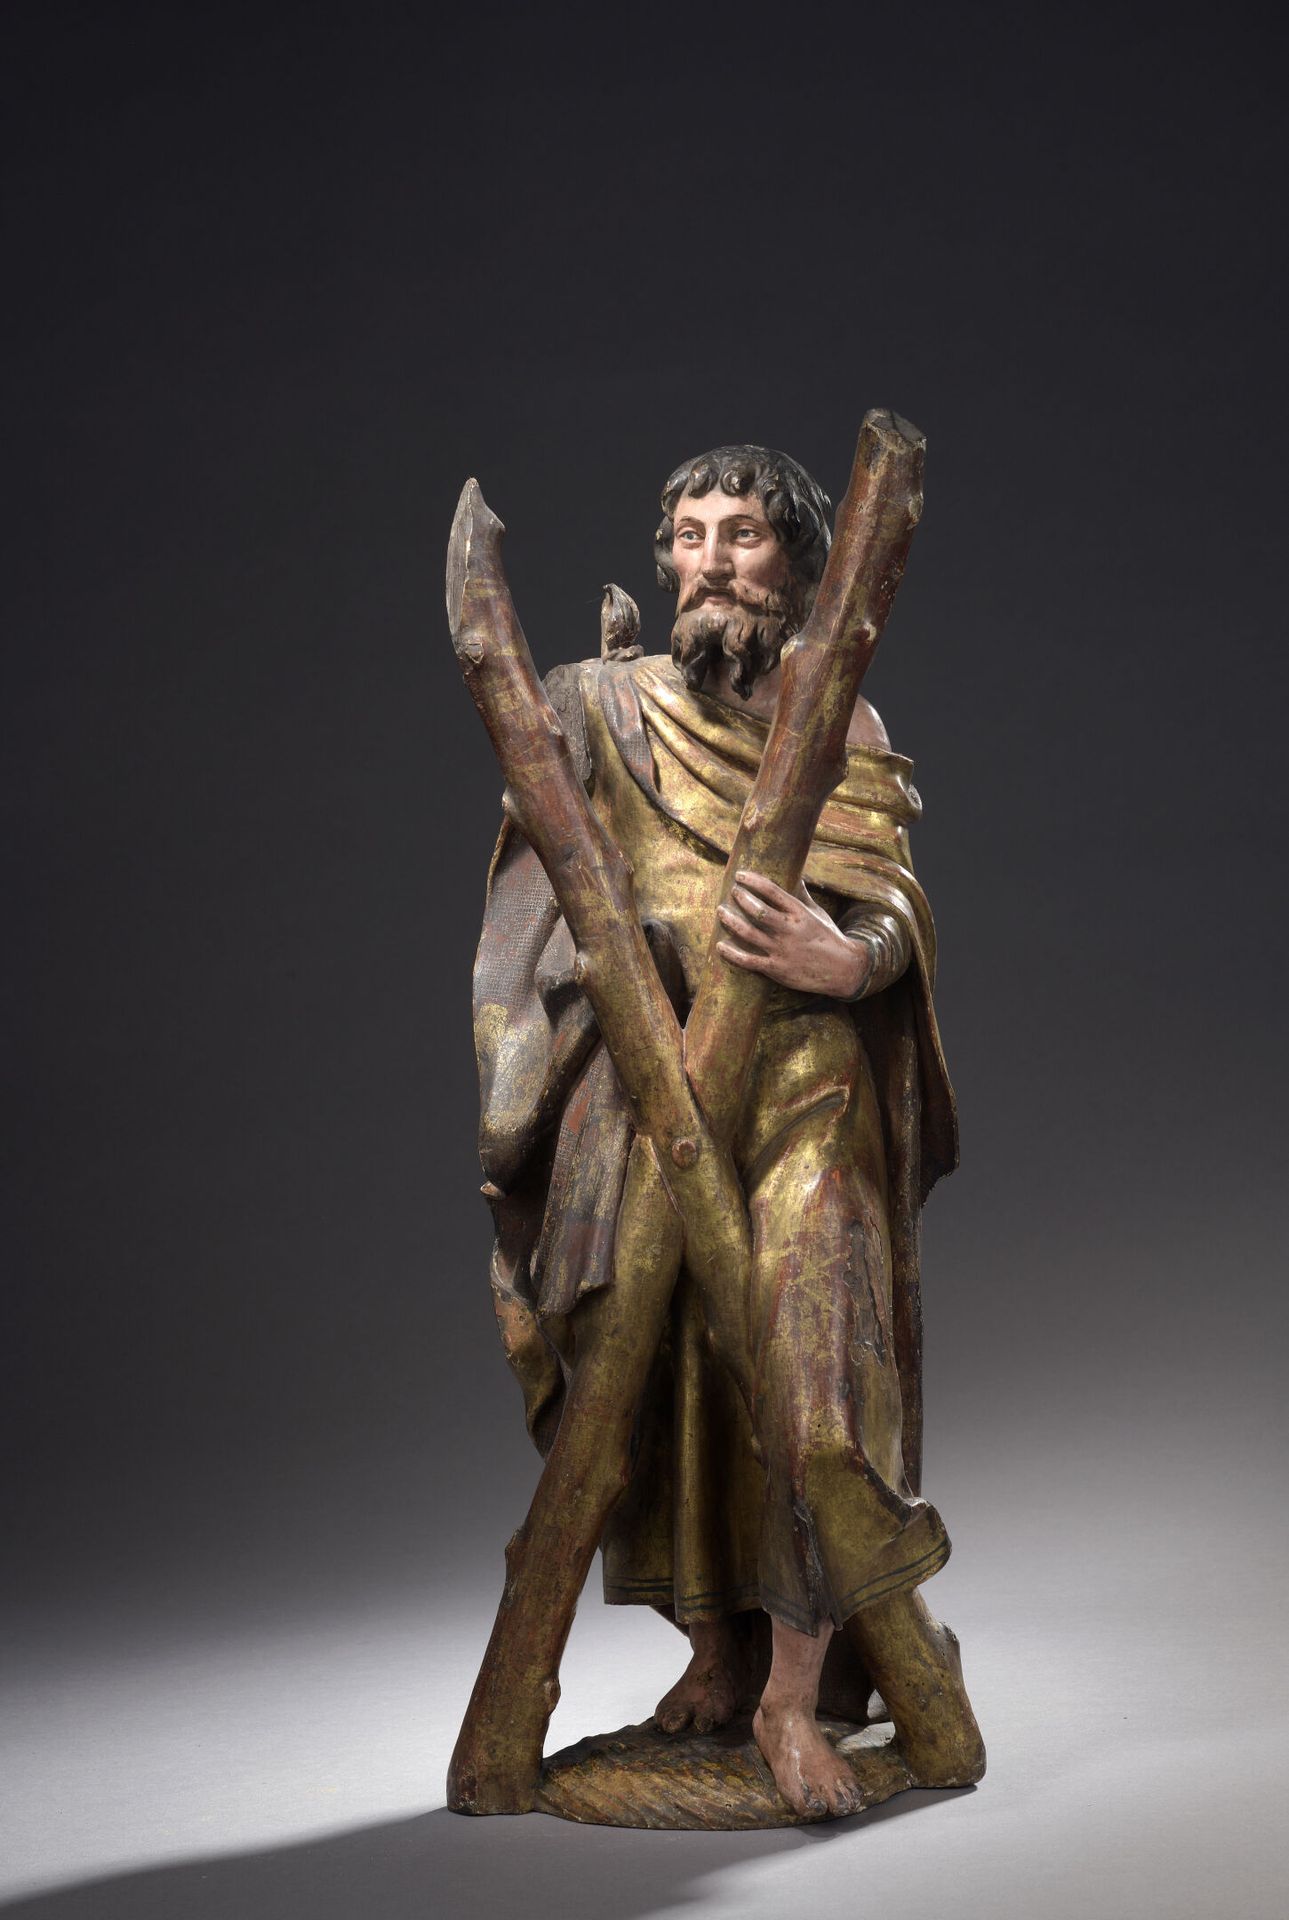 Null 西班牙，16 世纪末
圣安德鲁
多色木雕
H.55 厘米 AL-EJ
右臂缺失，小事故（十字架，肩上的绳结），多色修复